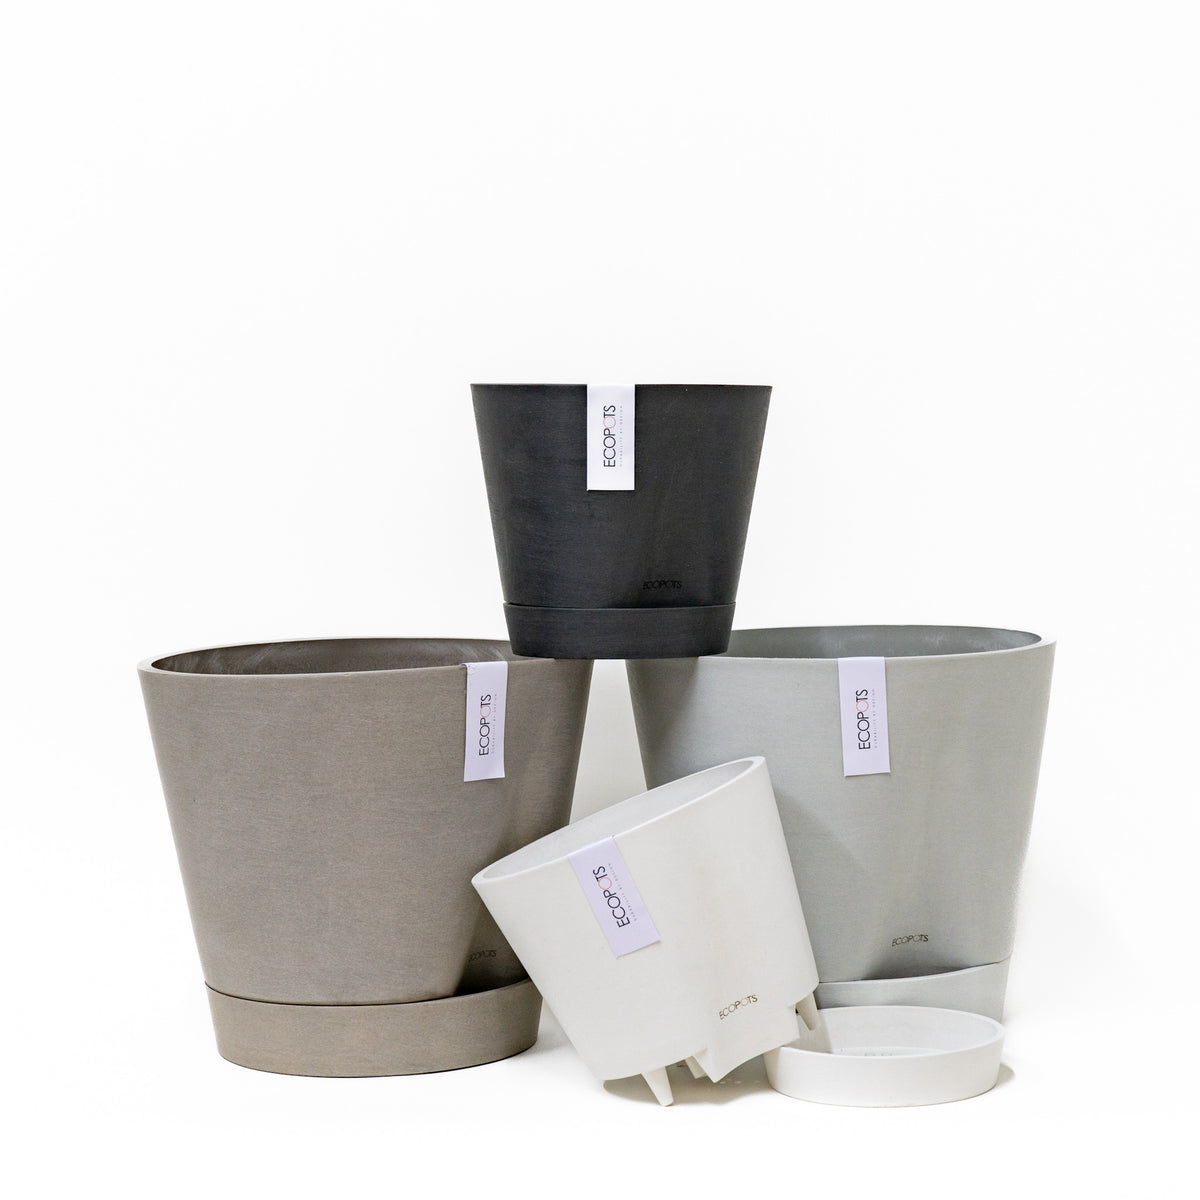 Plant Smart Studio Pot – 2 Ecopots Venice Shopleaf 20